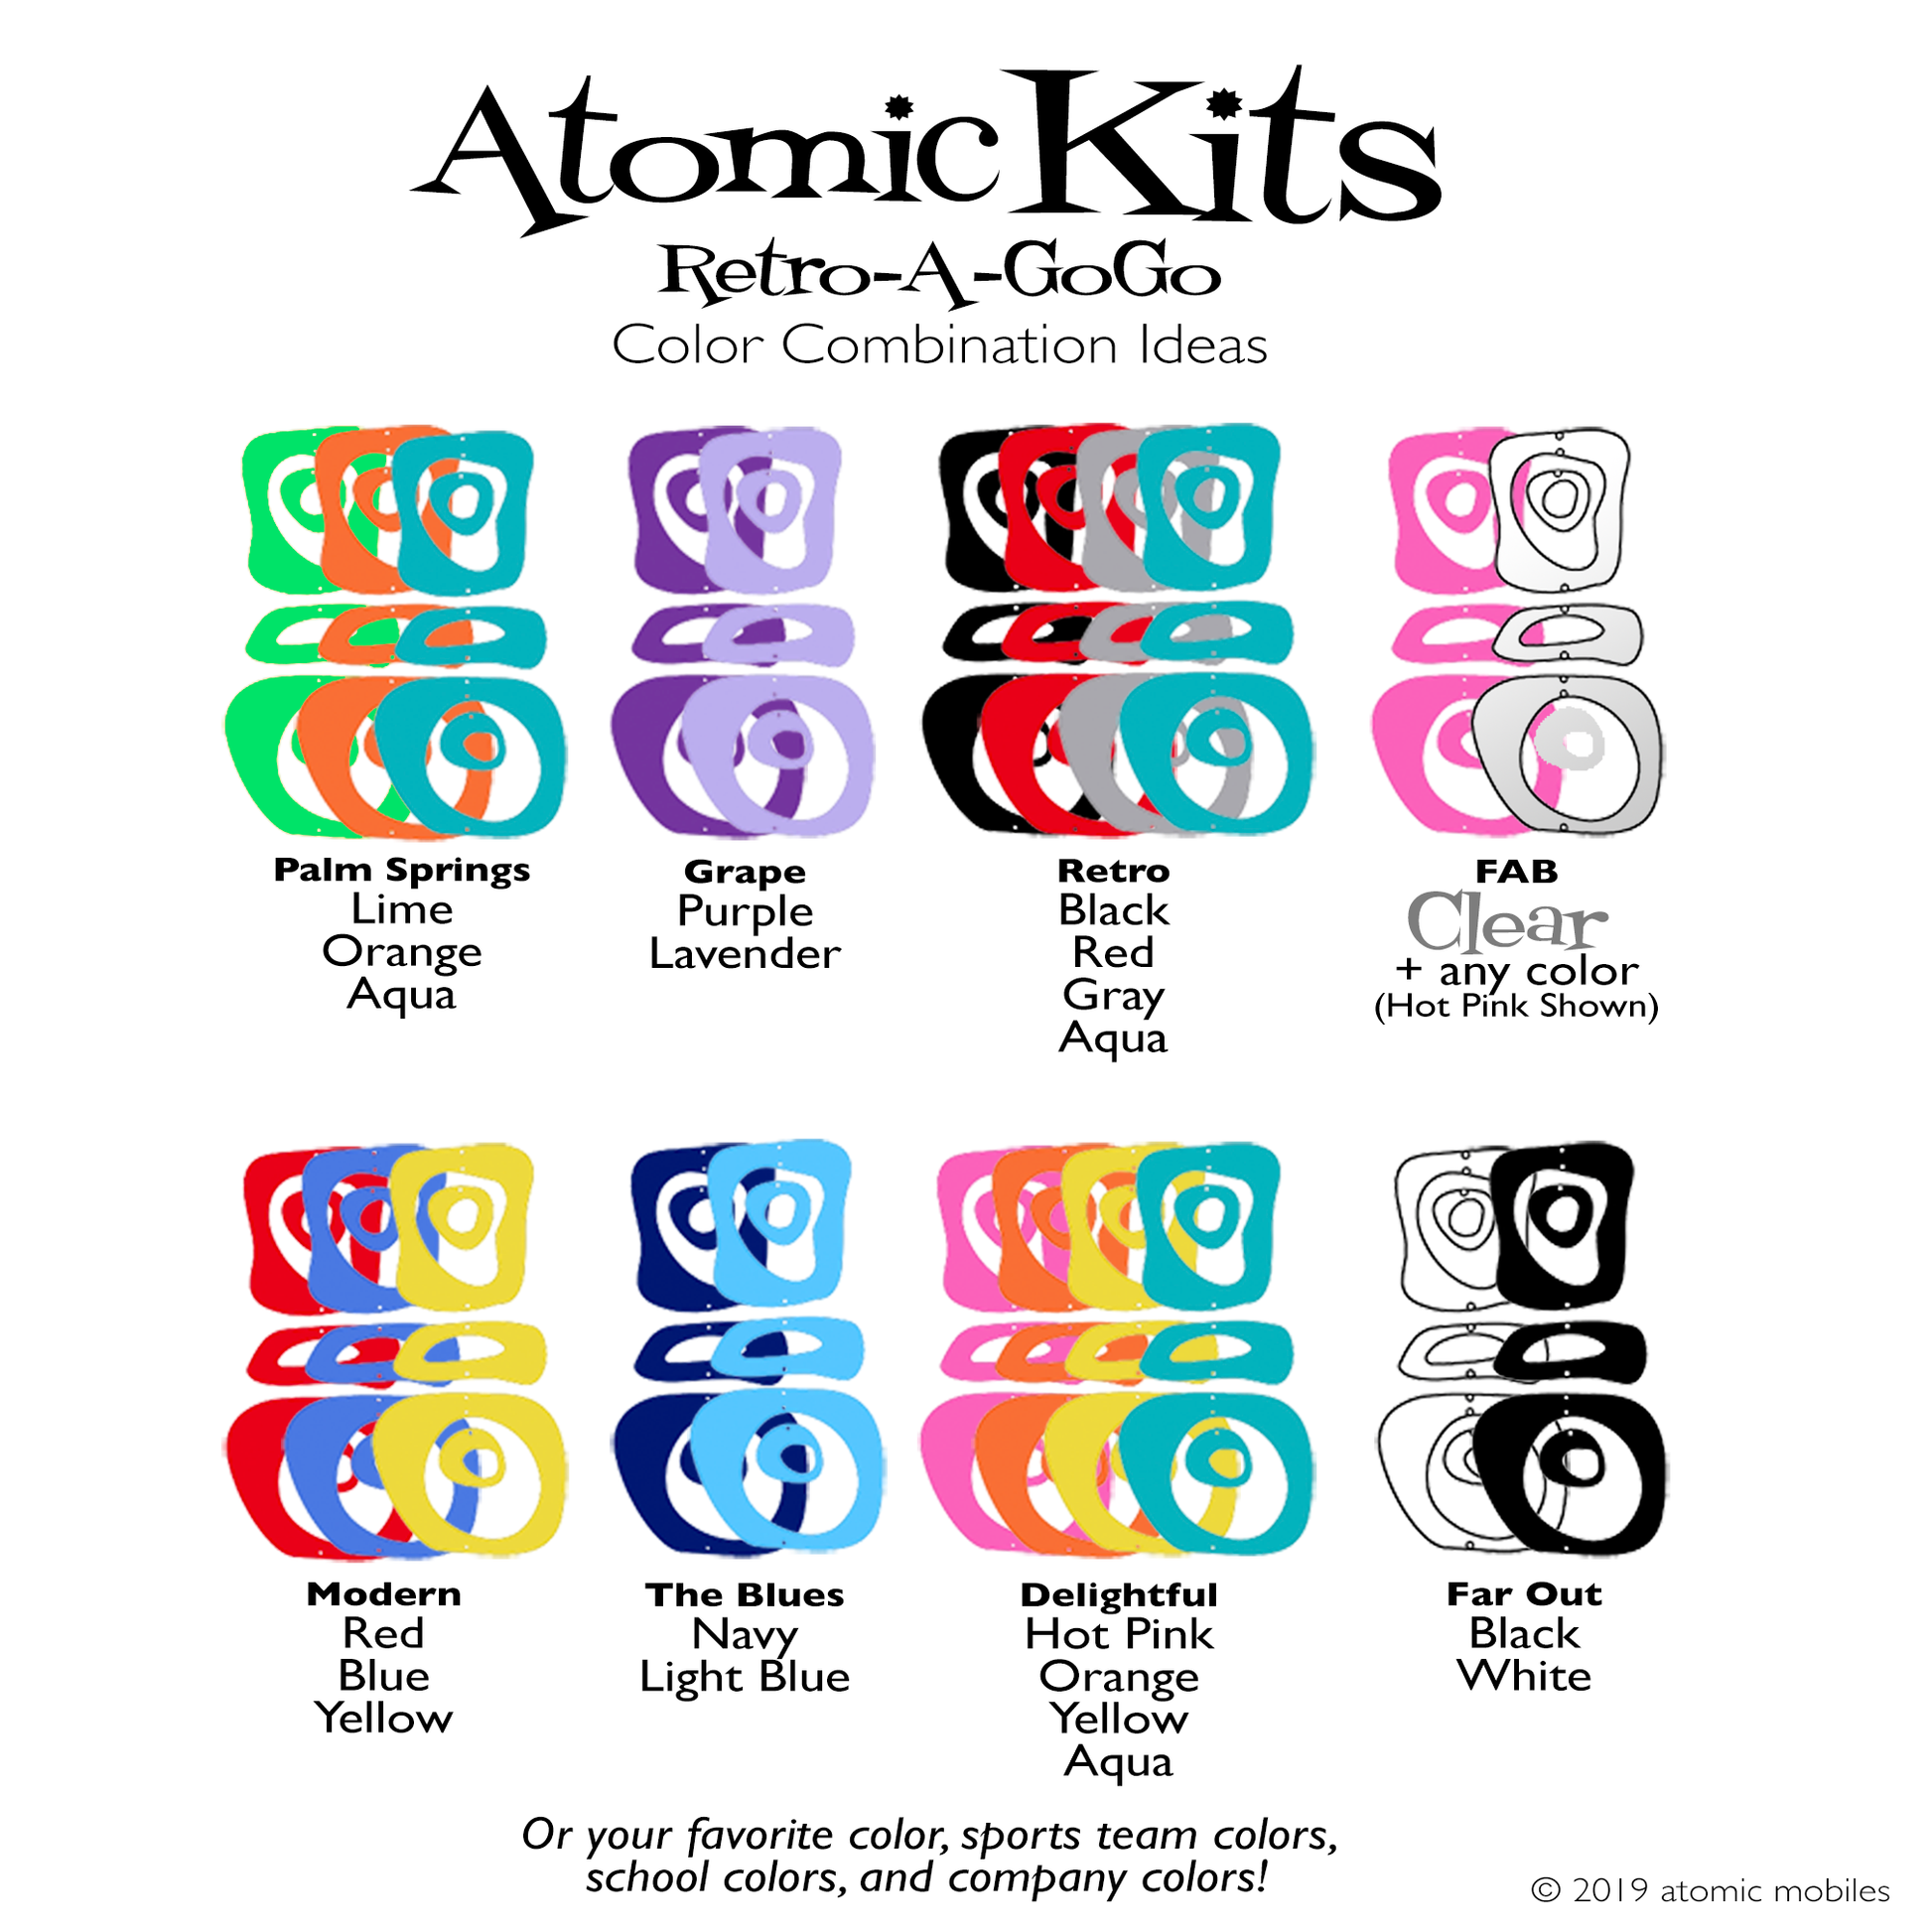 Retro-A-GoGo Atomic Kits Color Combination Ideas by AtomicMobiles.com